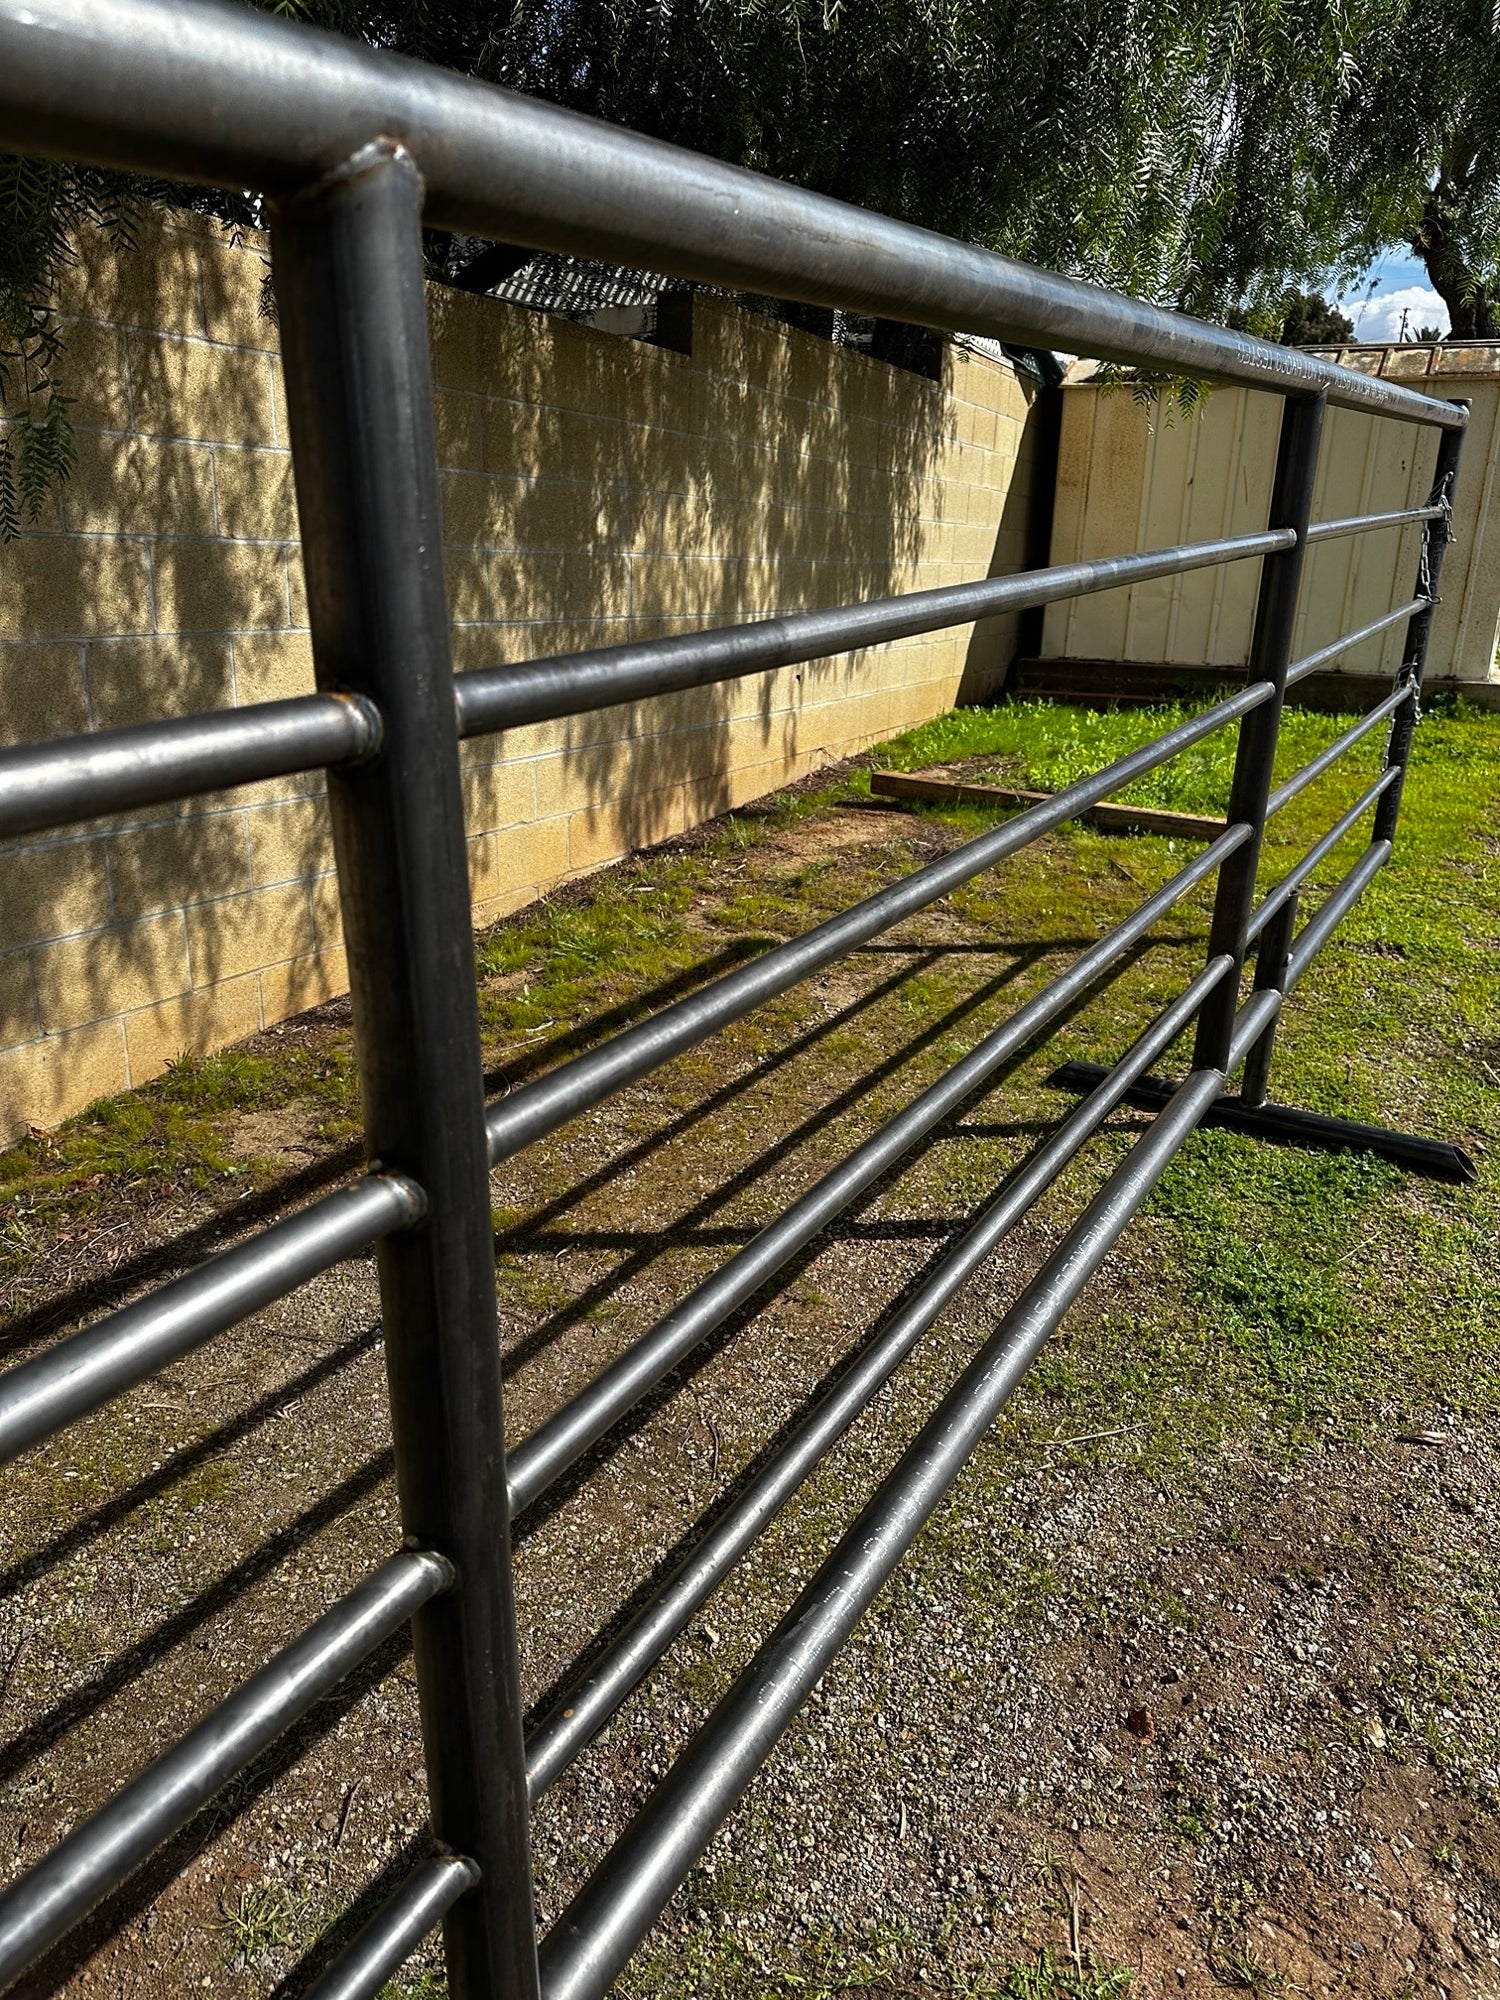 20ft Cattle Livestock Panels - Freestanding with Detachable Feet